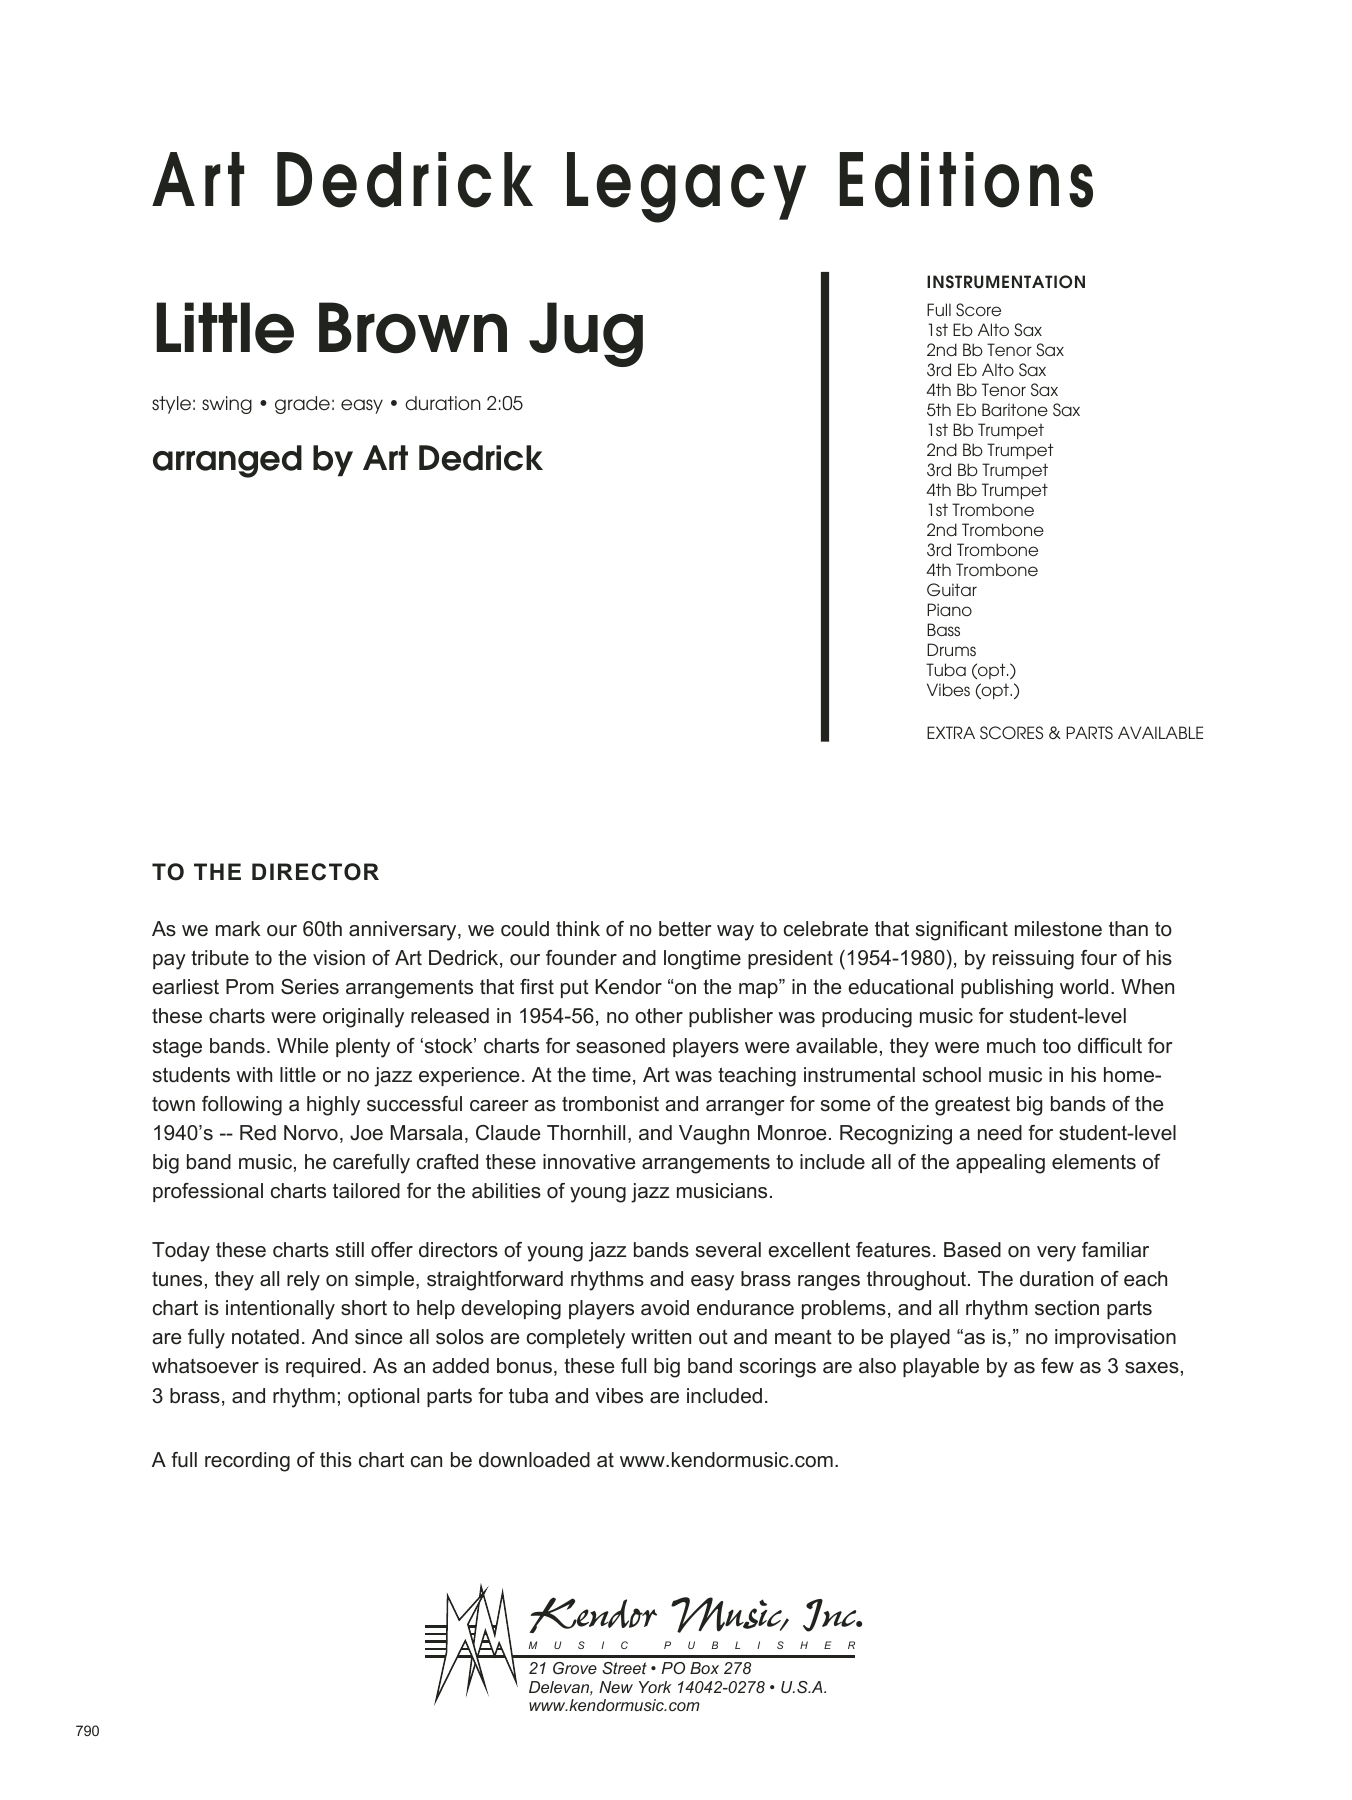 Download Art Dedrick Little Brown Jug - Full Score Sheet Music